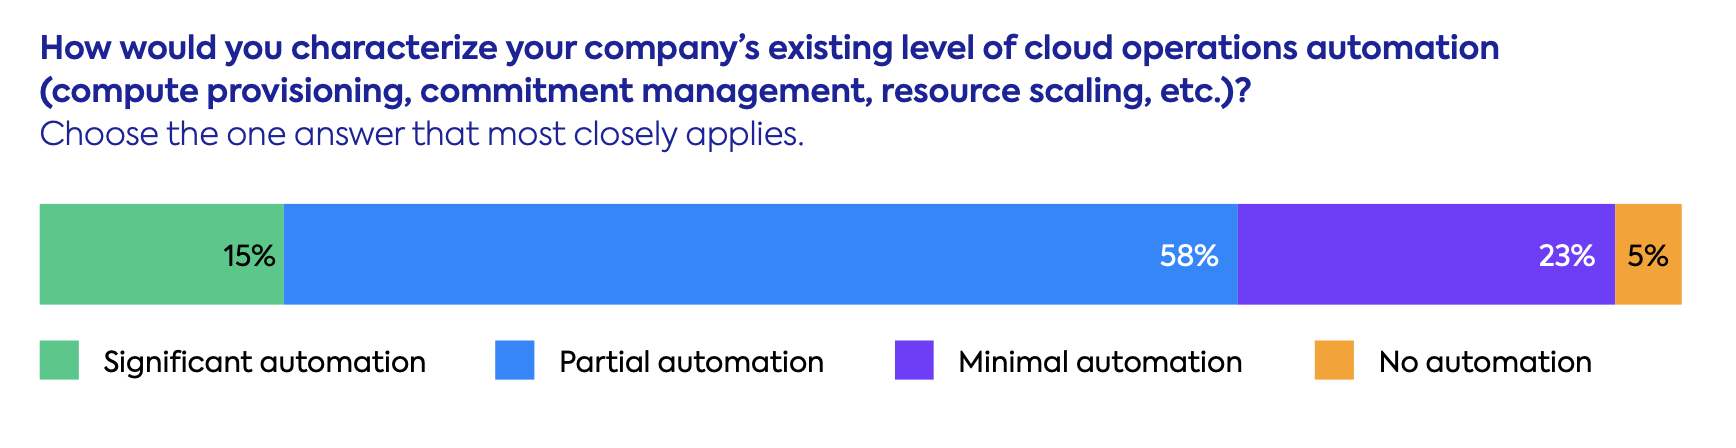 CloudOps report - automation level